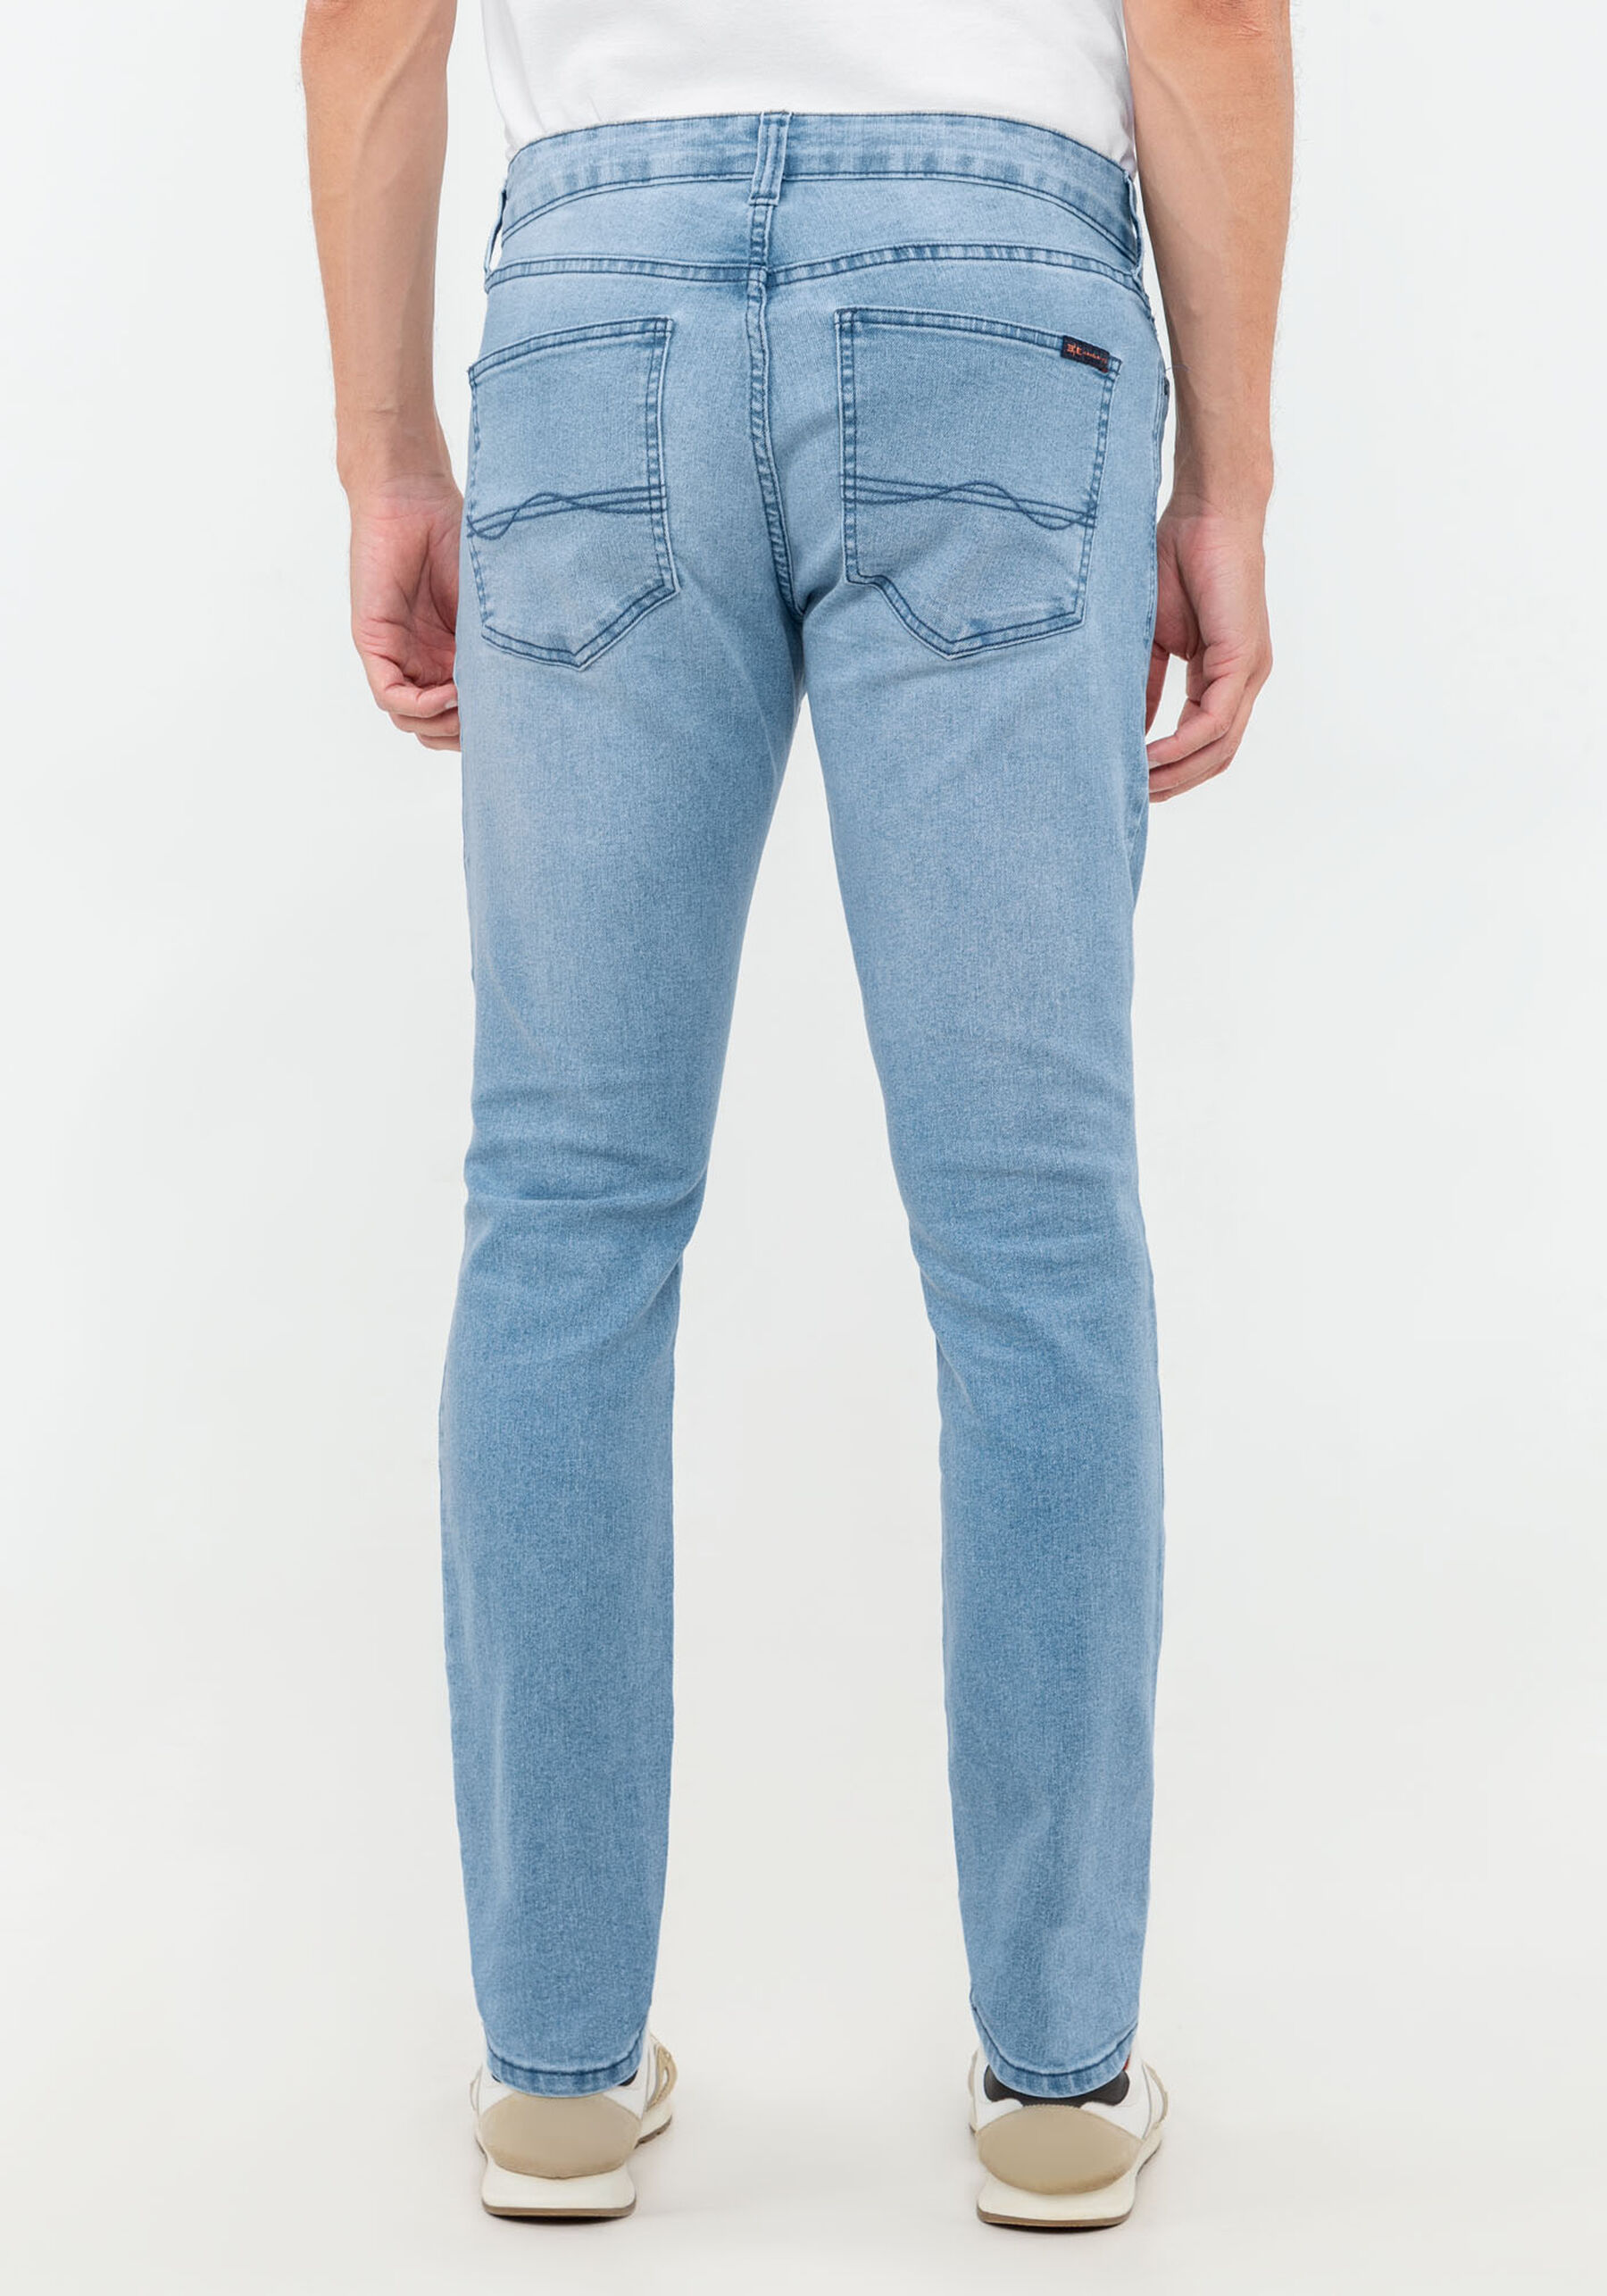 Calça Jeans Masculina Skinny com Elastano